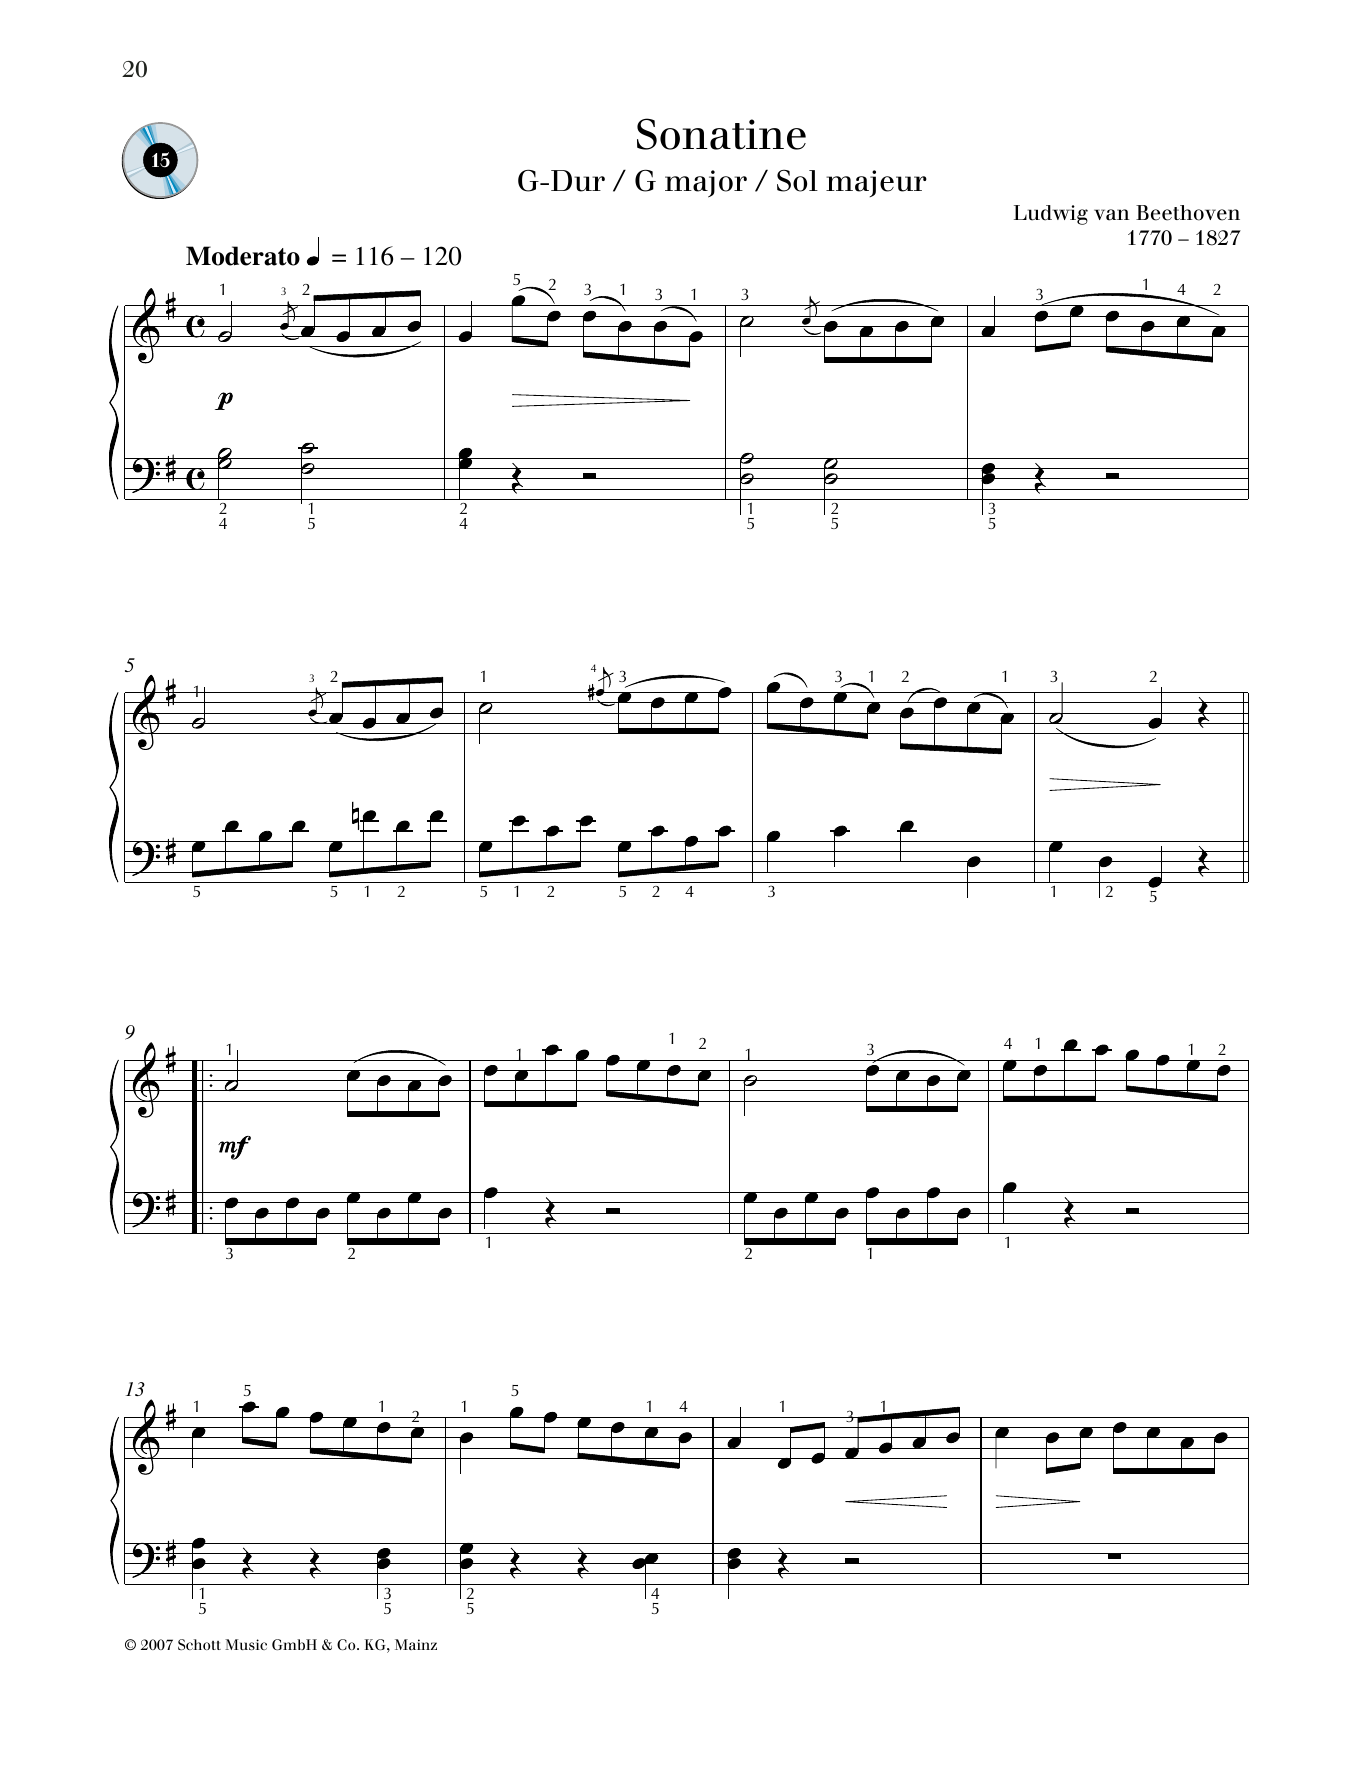 Ludwig van Beethoven Sonatina No. 1 G major Sheet Music Notes & Chords for Piano Solo - Download or Print PDF